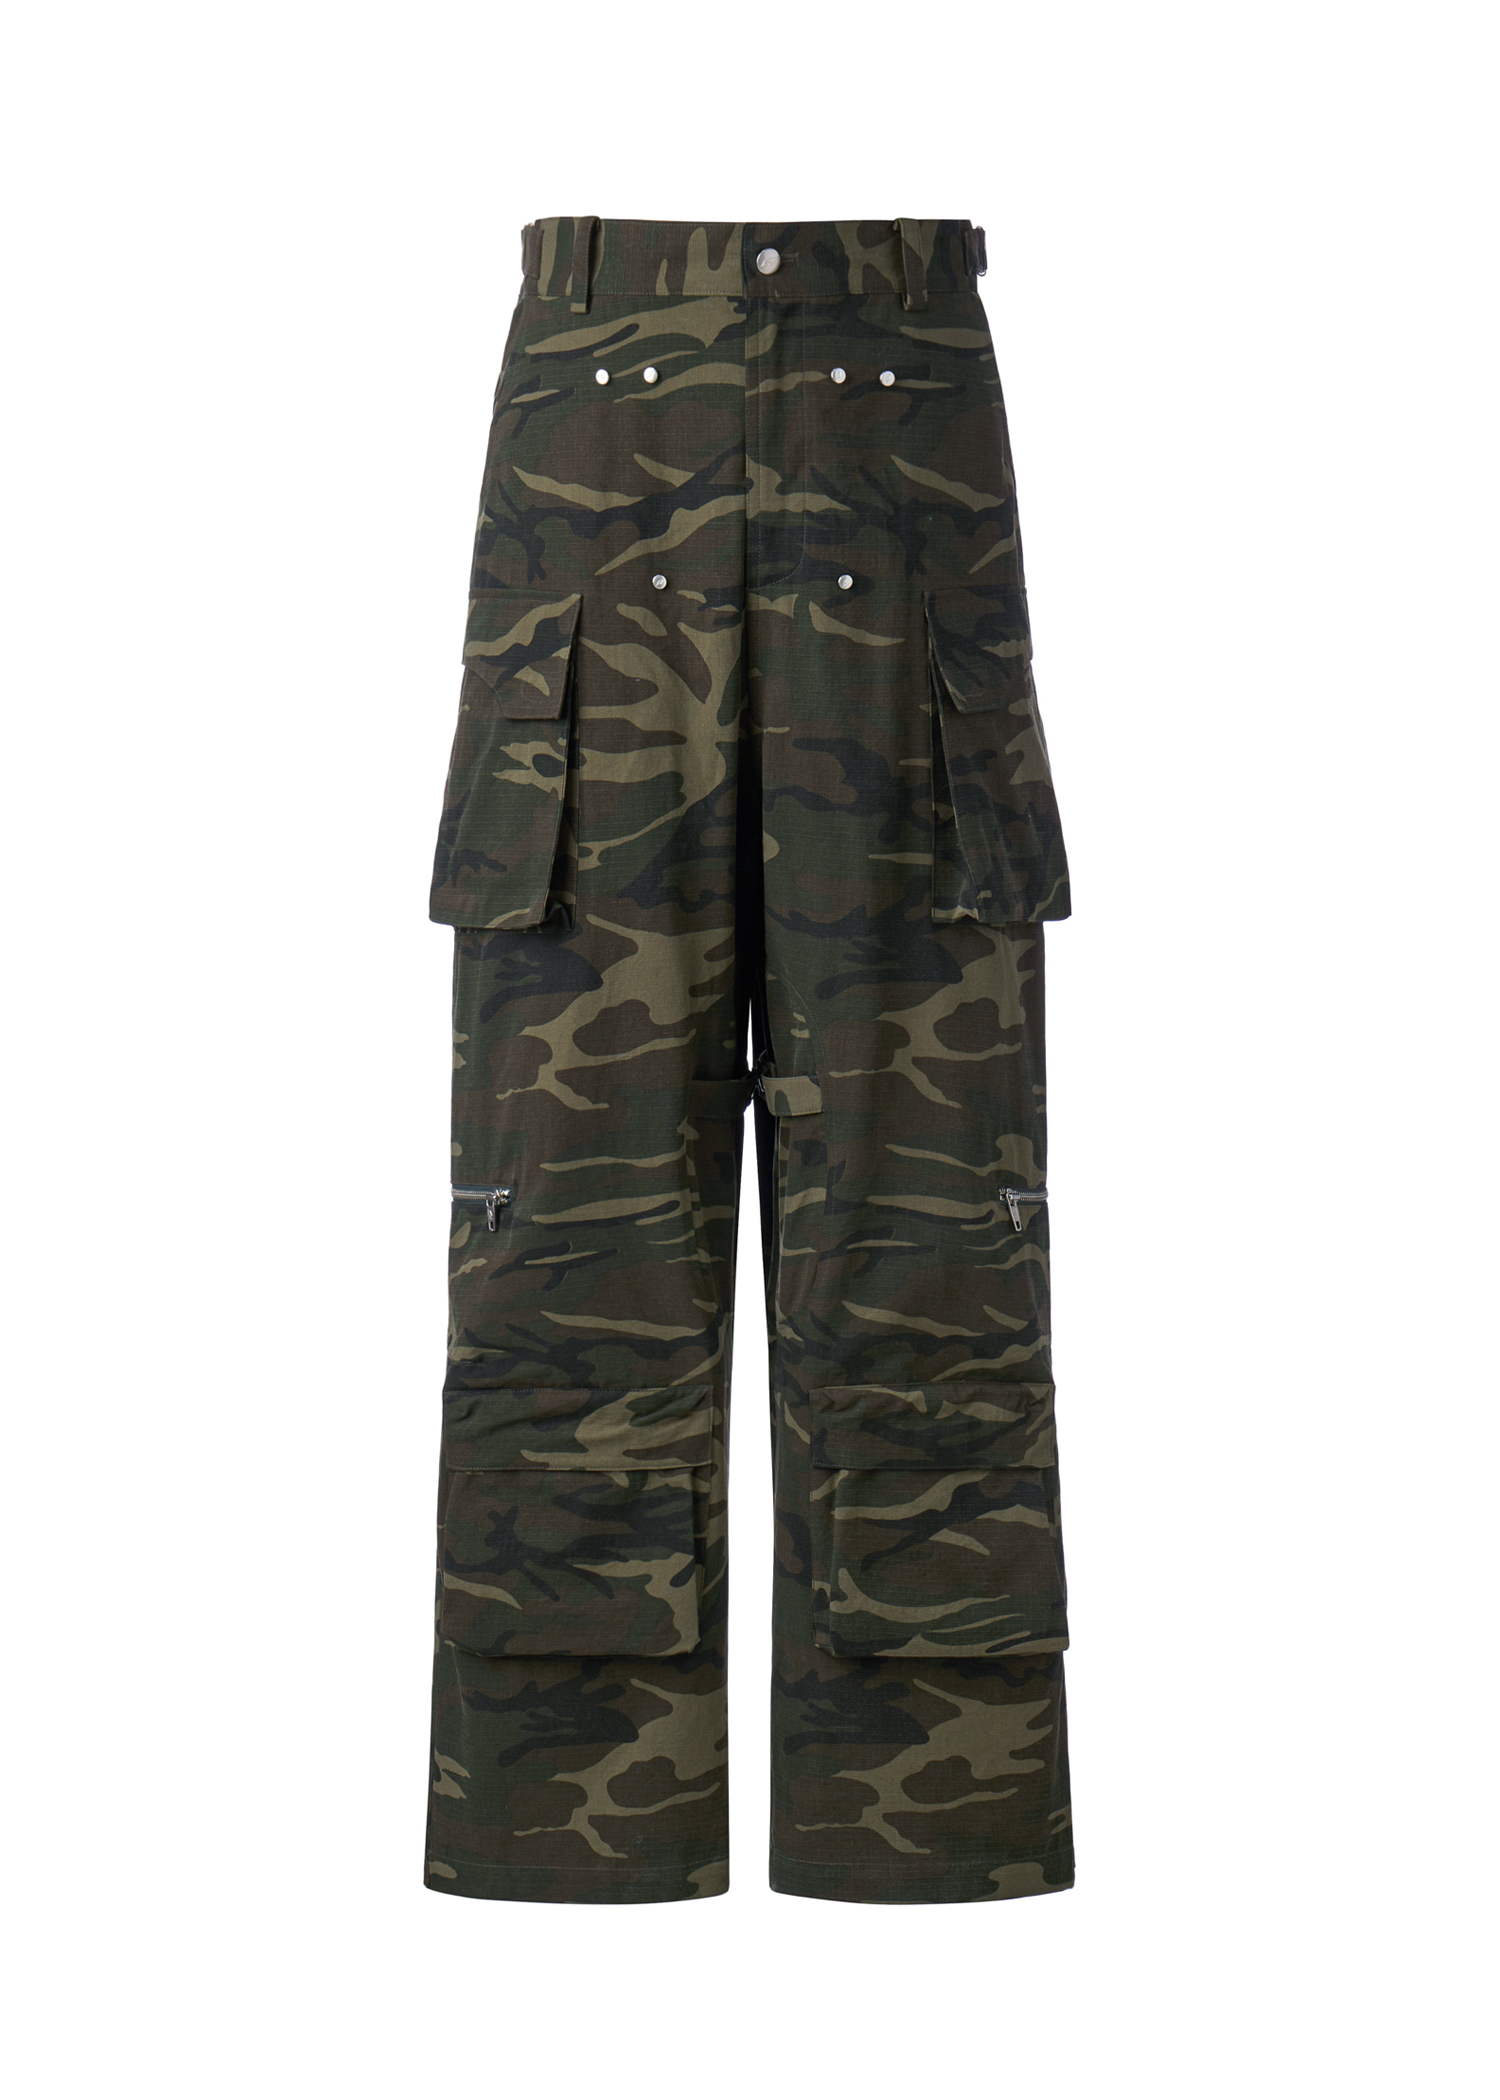 004-23 multi-pocket pants - camo